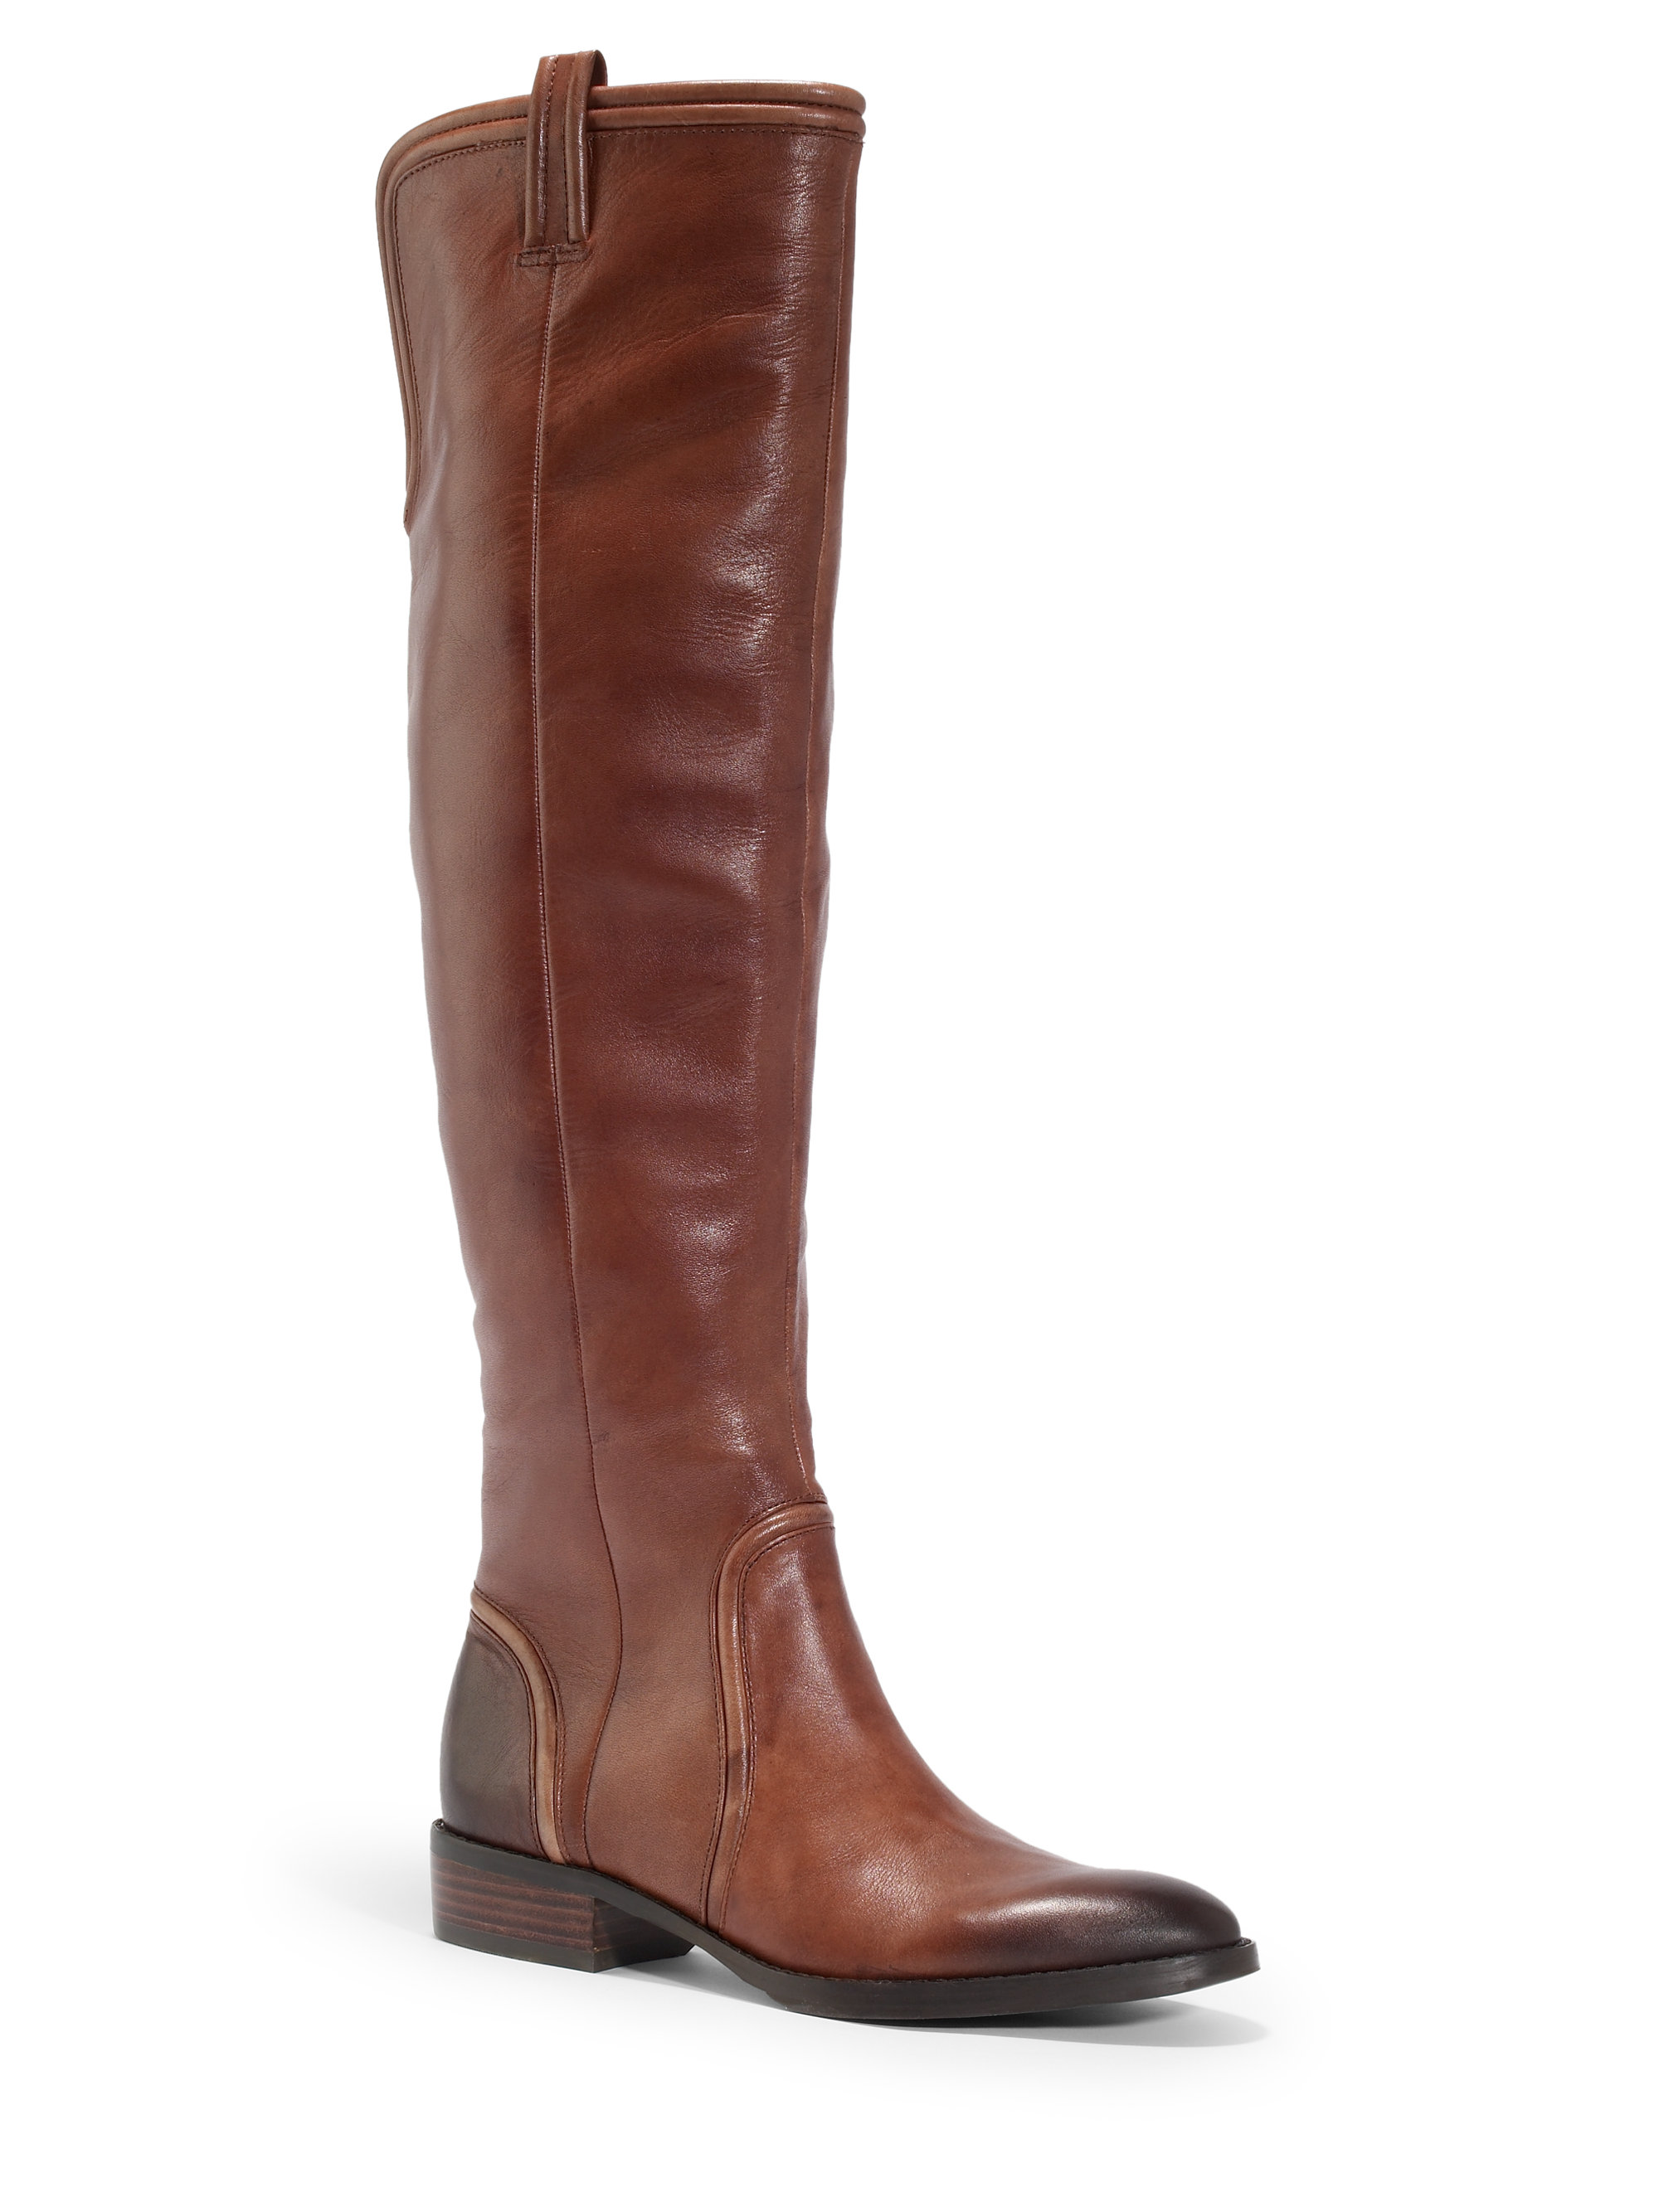 Saks Fifth Avenue Allice Overtheknee Flat Boots in Brown - Lyst